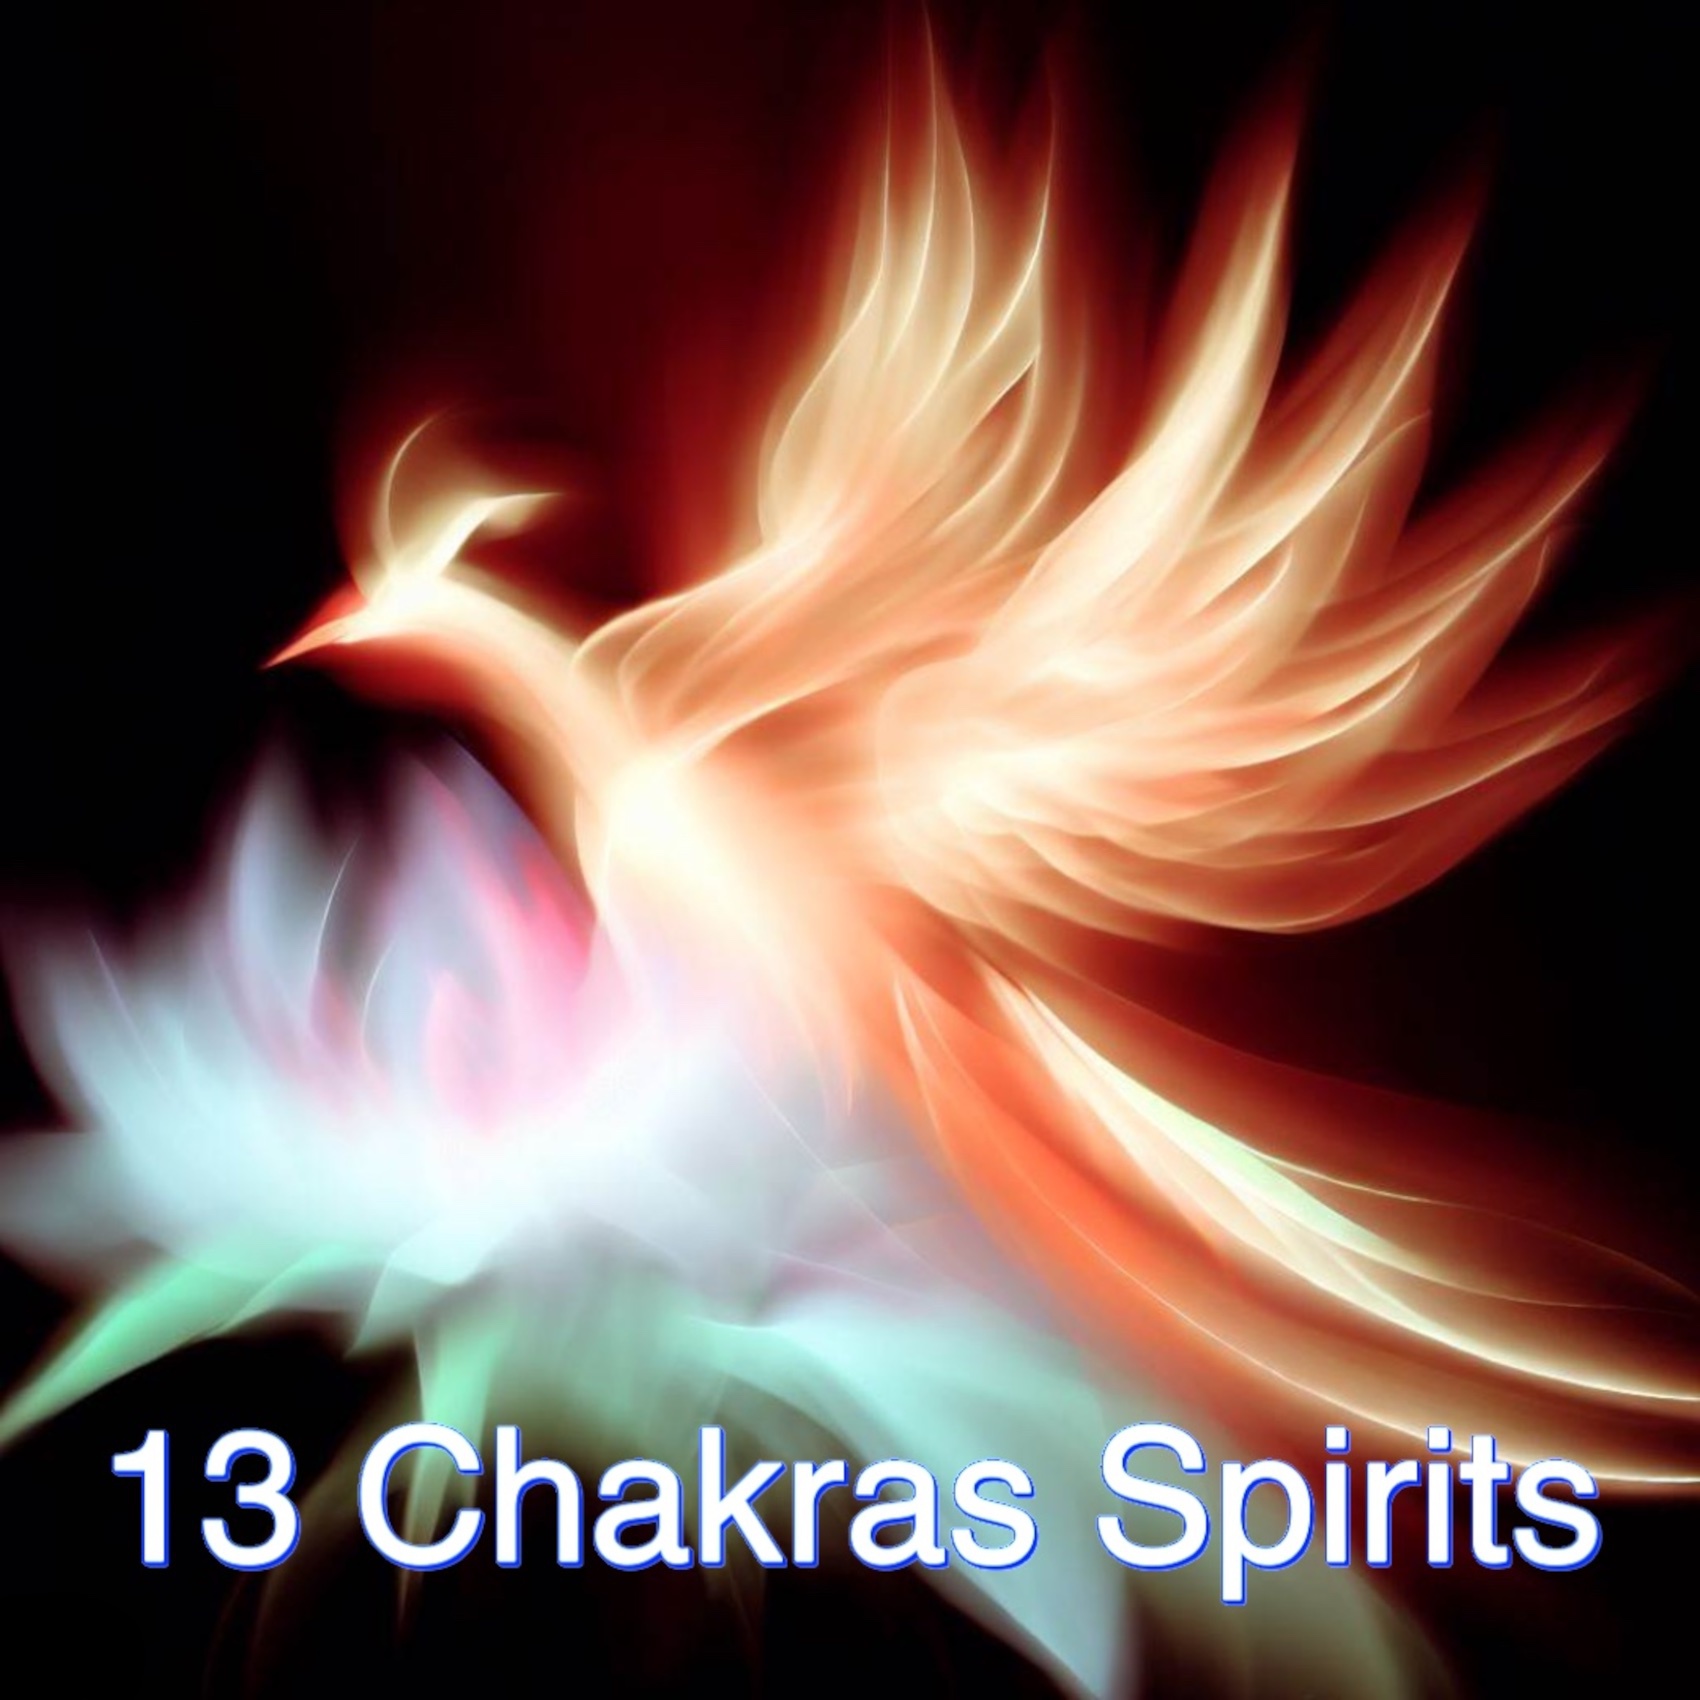 13 Chakras Spirits